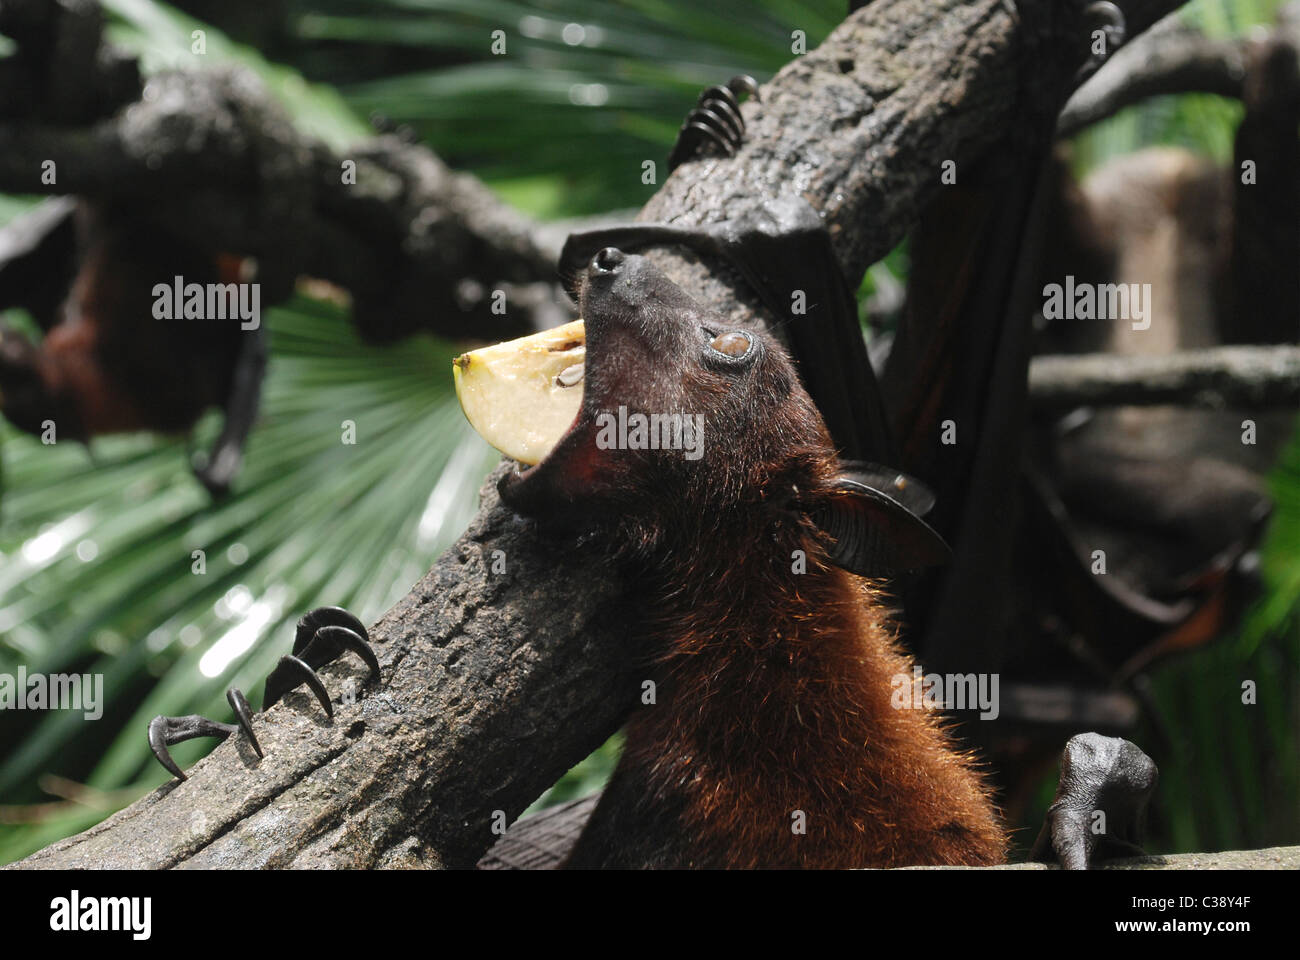 : La malese flying fox [bat] mangiare frutta; Singapore Zoo Foto Stock